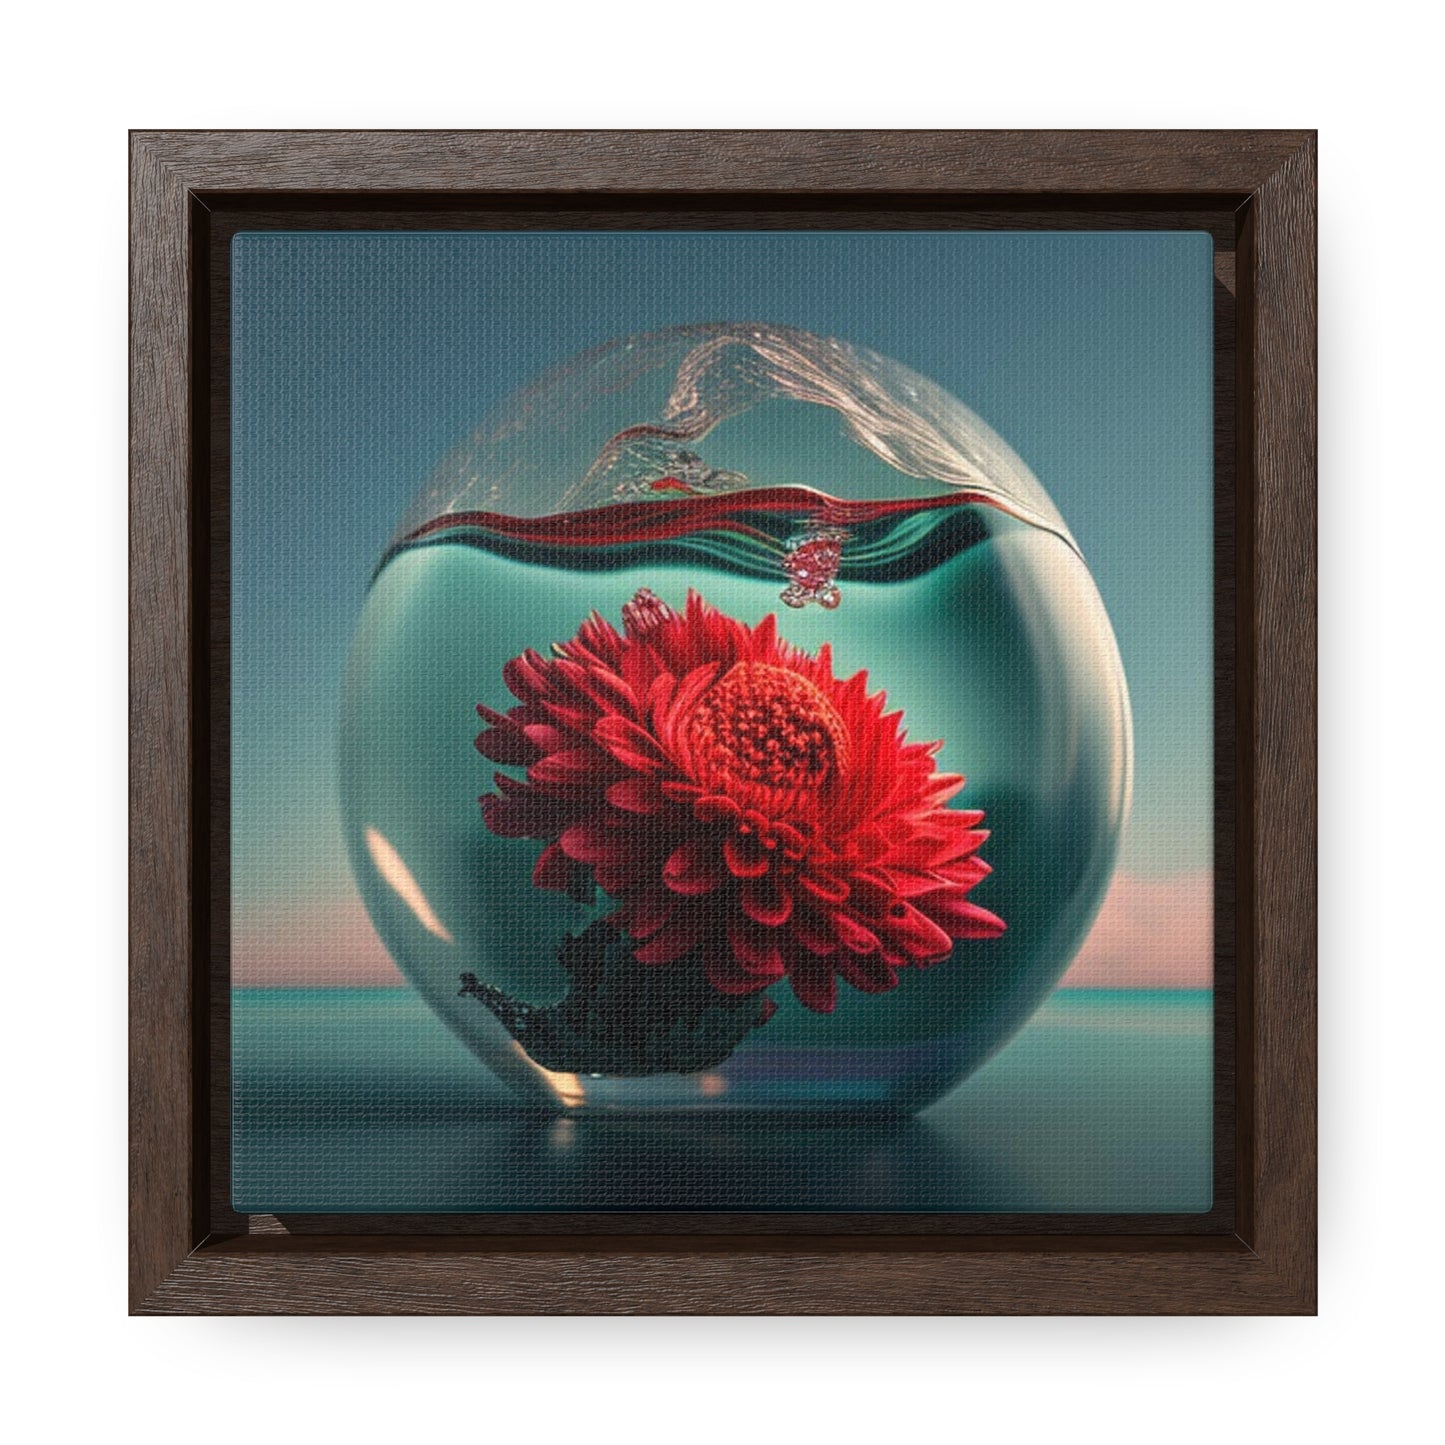 Gallery Canvas Wraps, Square Frame Chrysanthemum 4